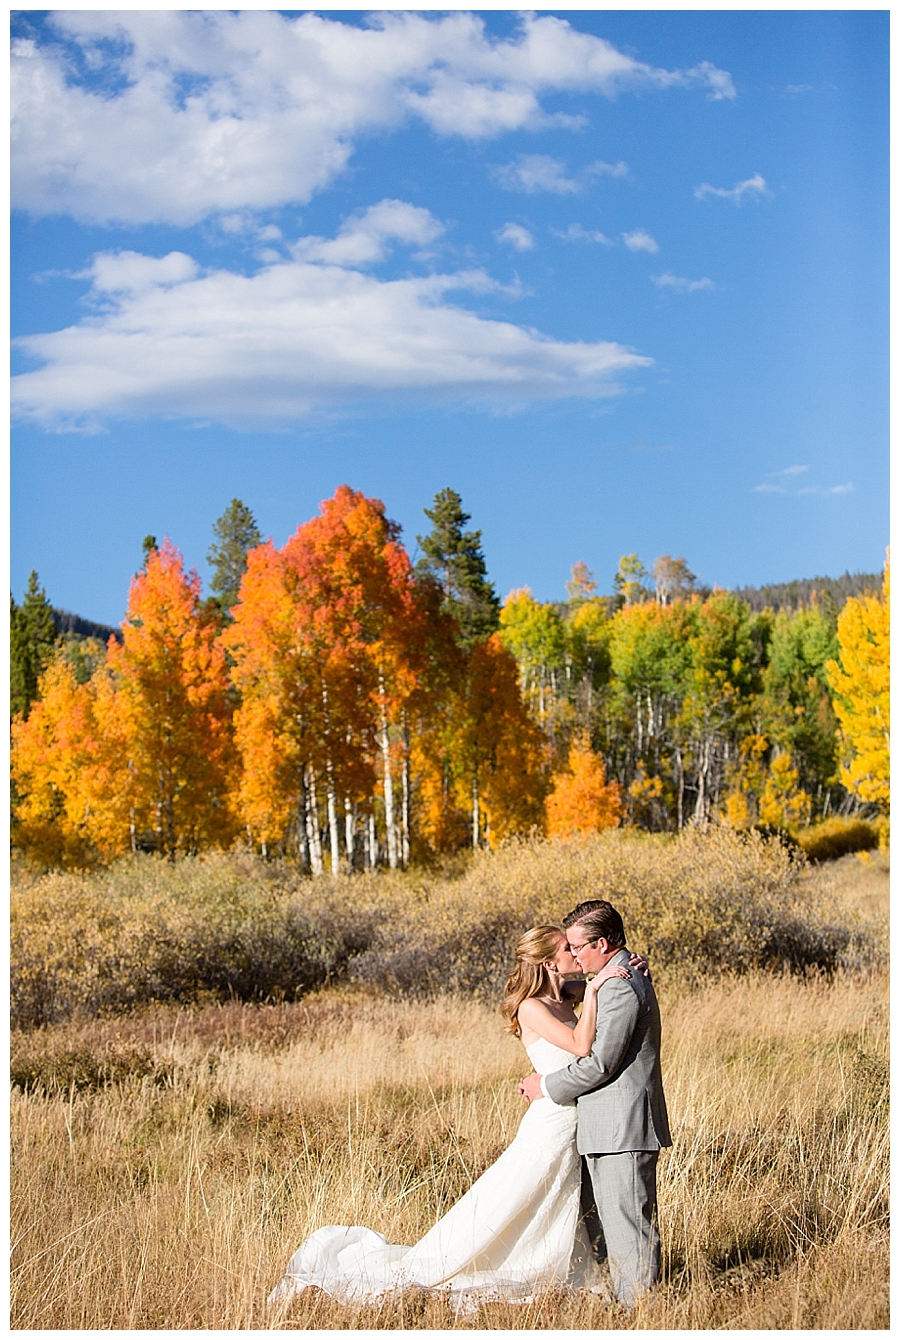 Fall wedding in Colorado at Devils thumb in tabernash